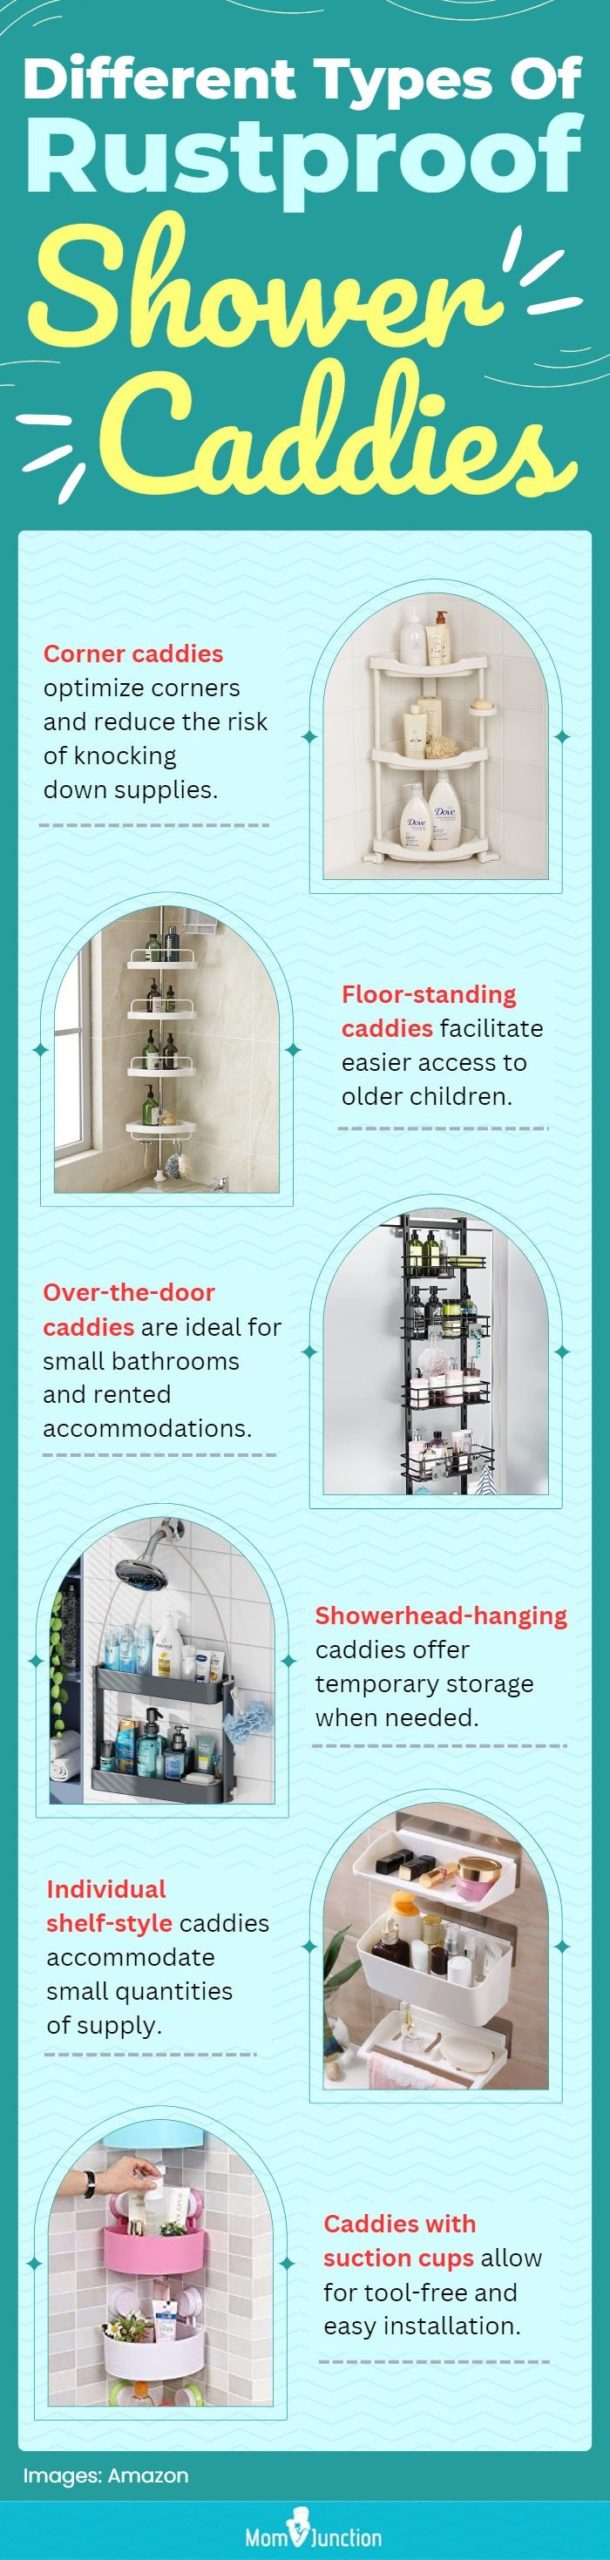 Different Types Of Rustproof Shower Caddies (infographic)